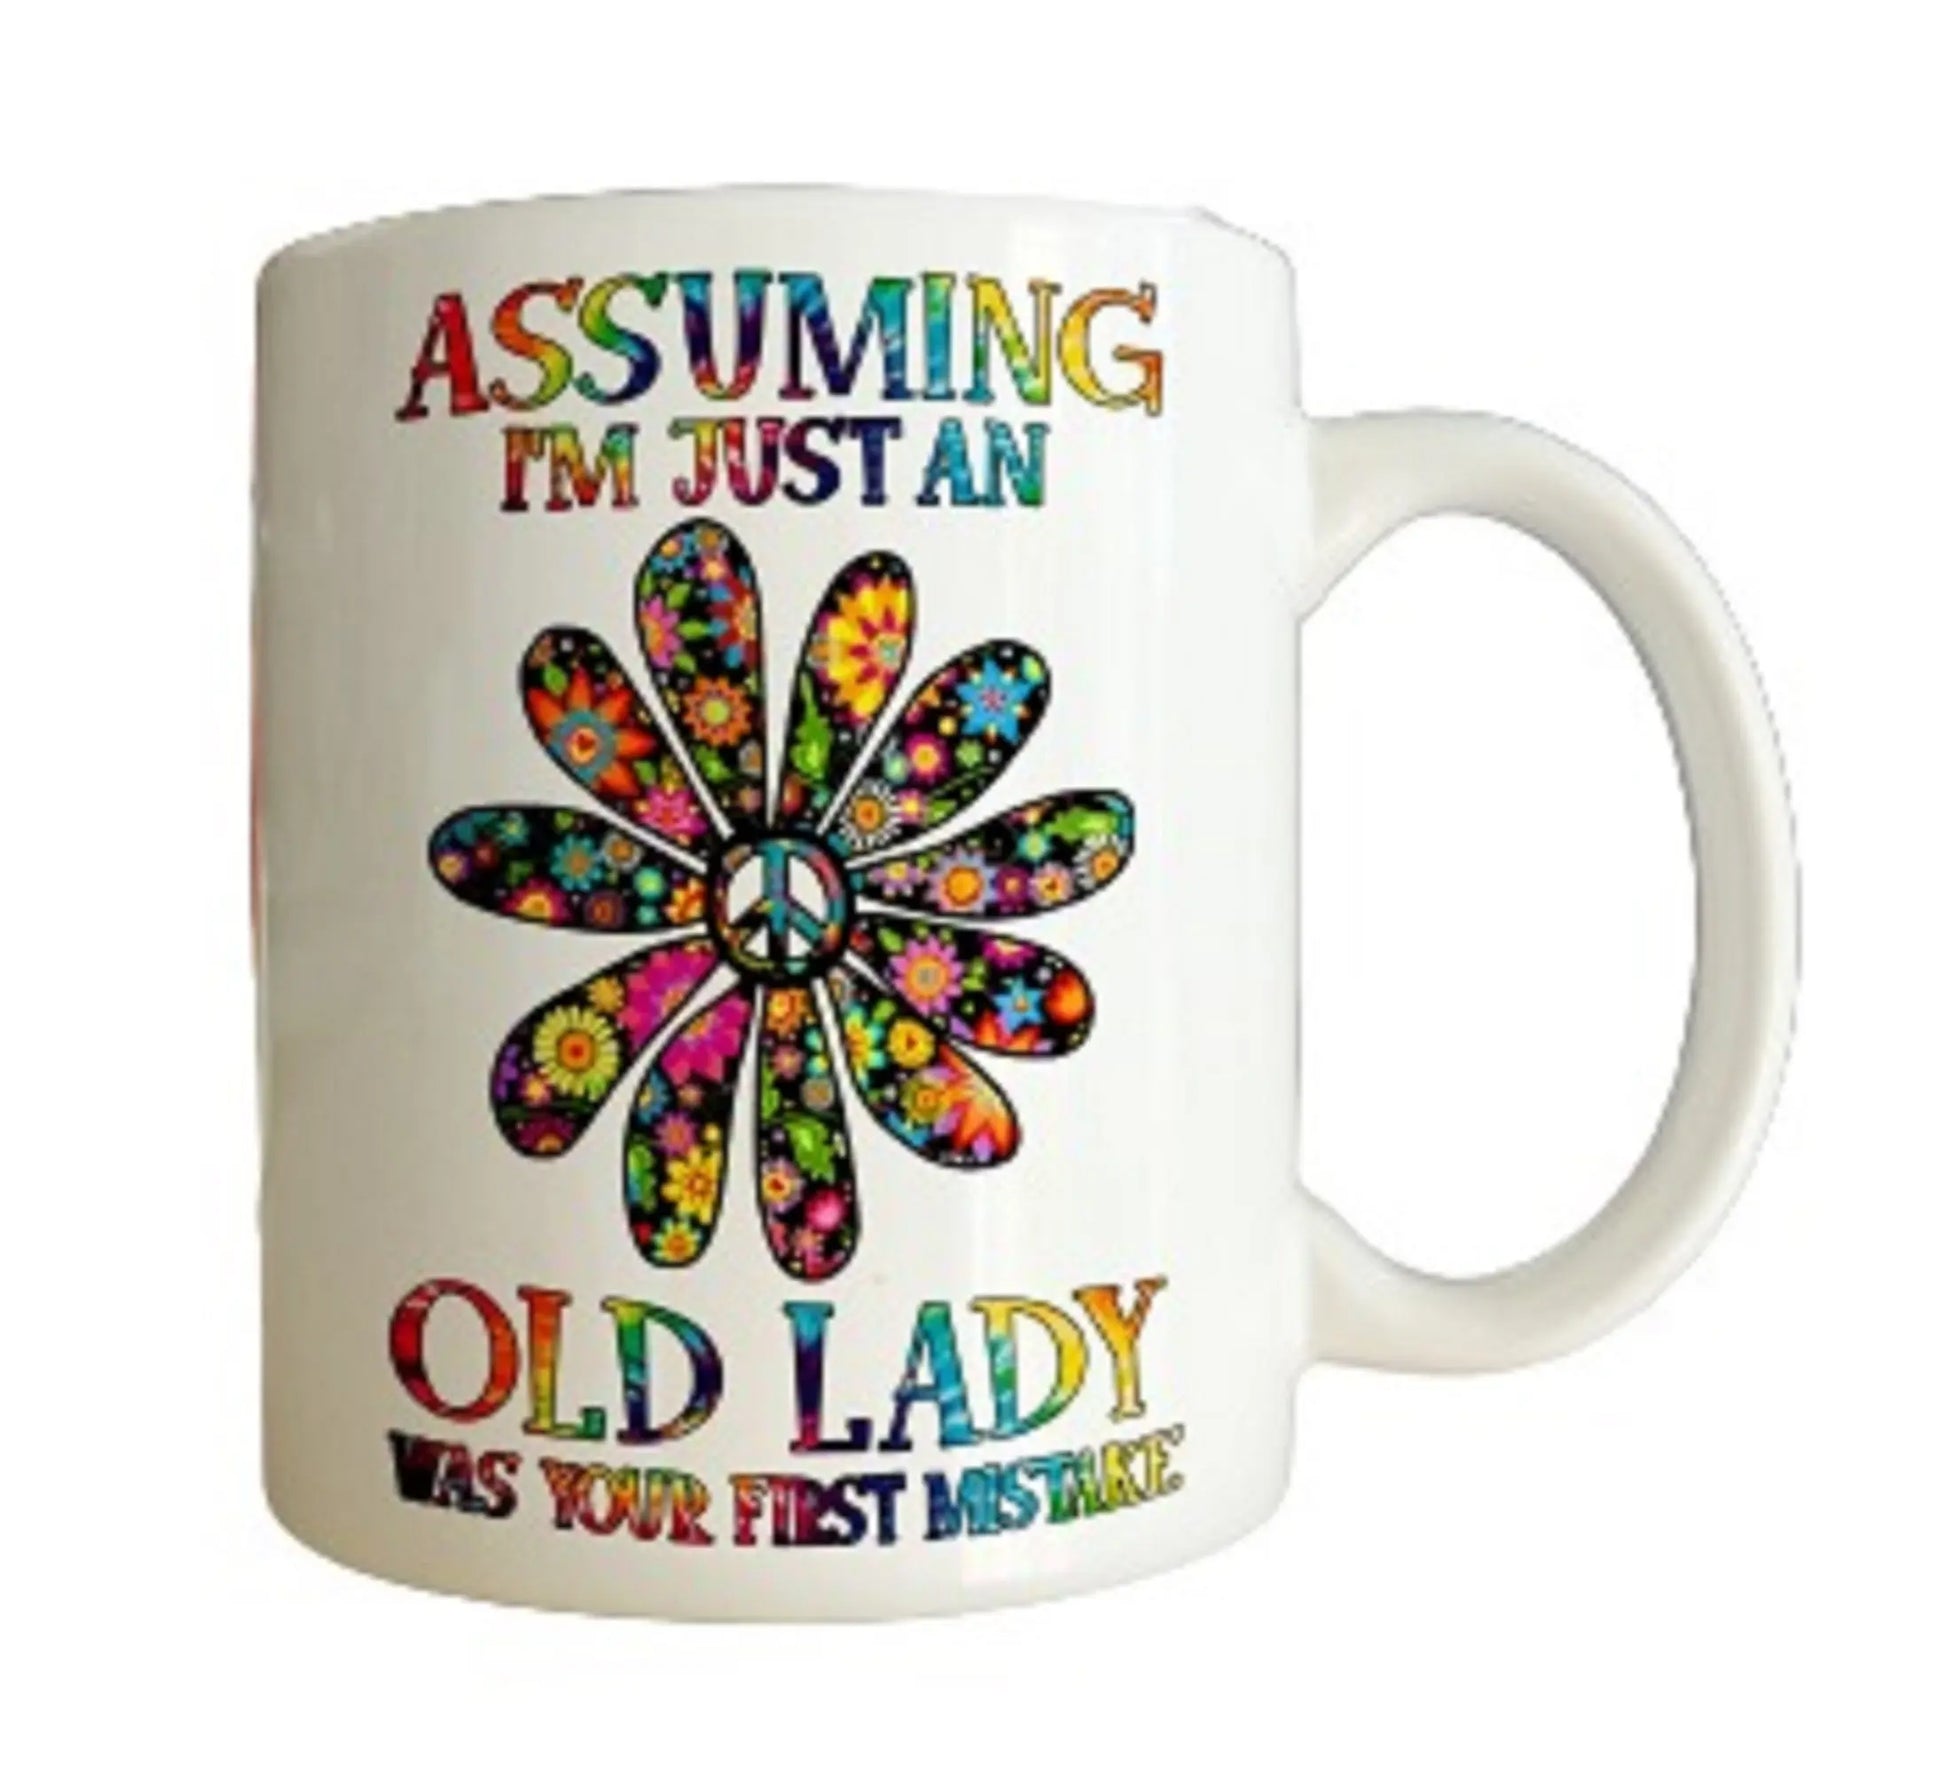  Assuming I'm Just A Old Lady Mug by Free Spirit Accessories sold by Free Spirit Accessories